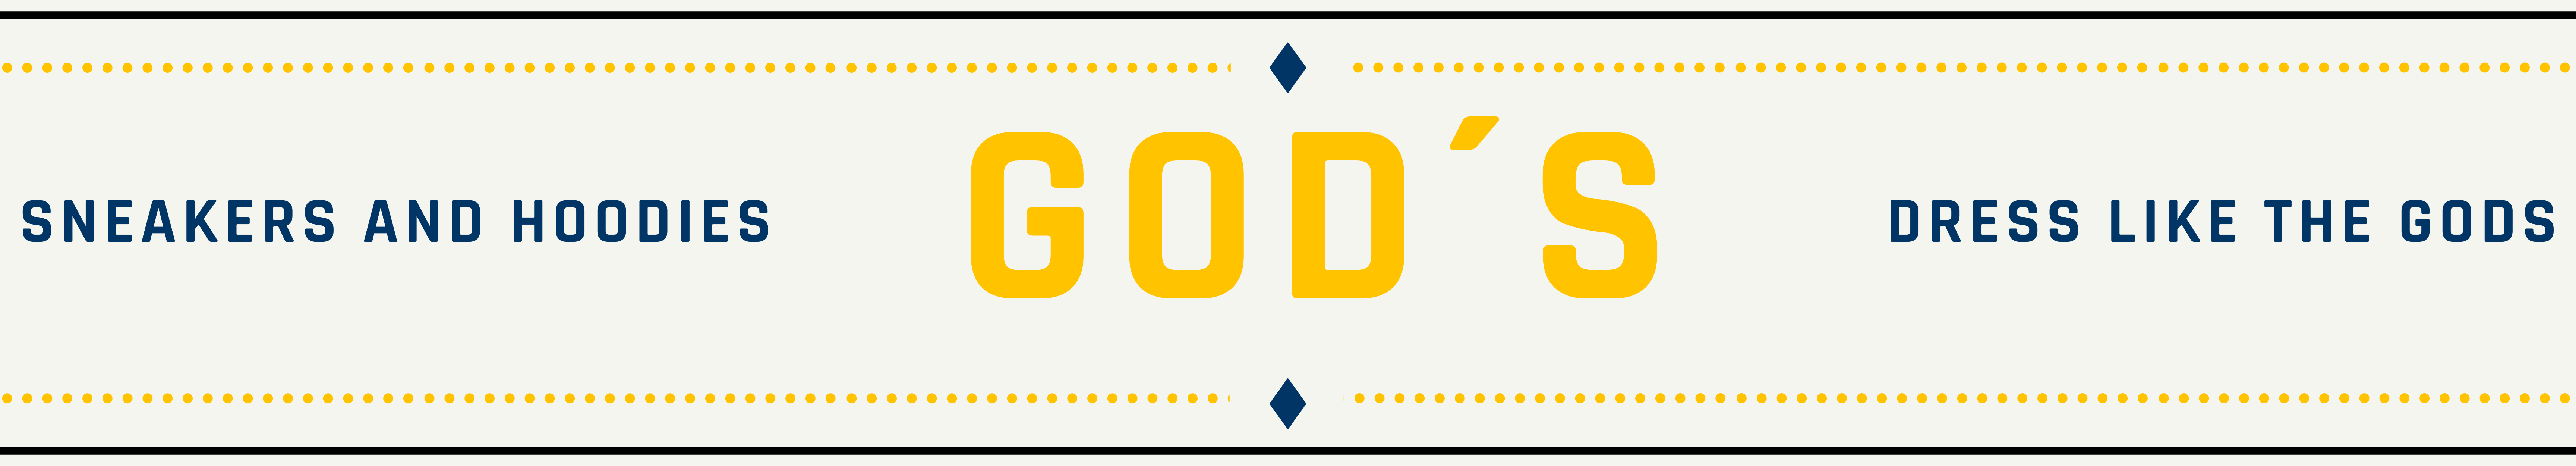 banner god